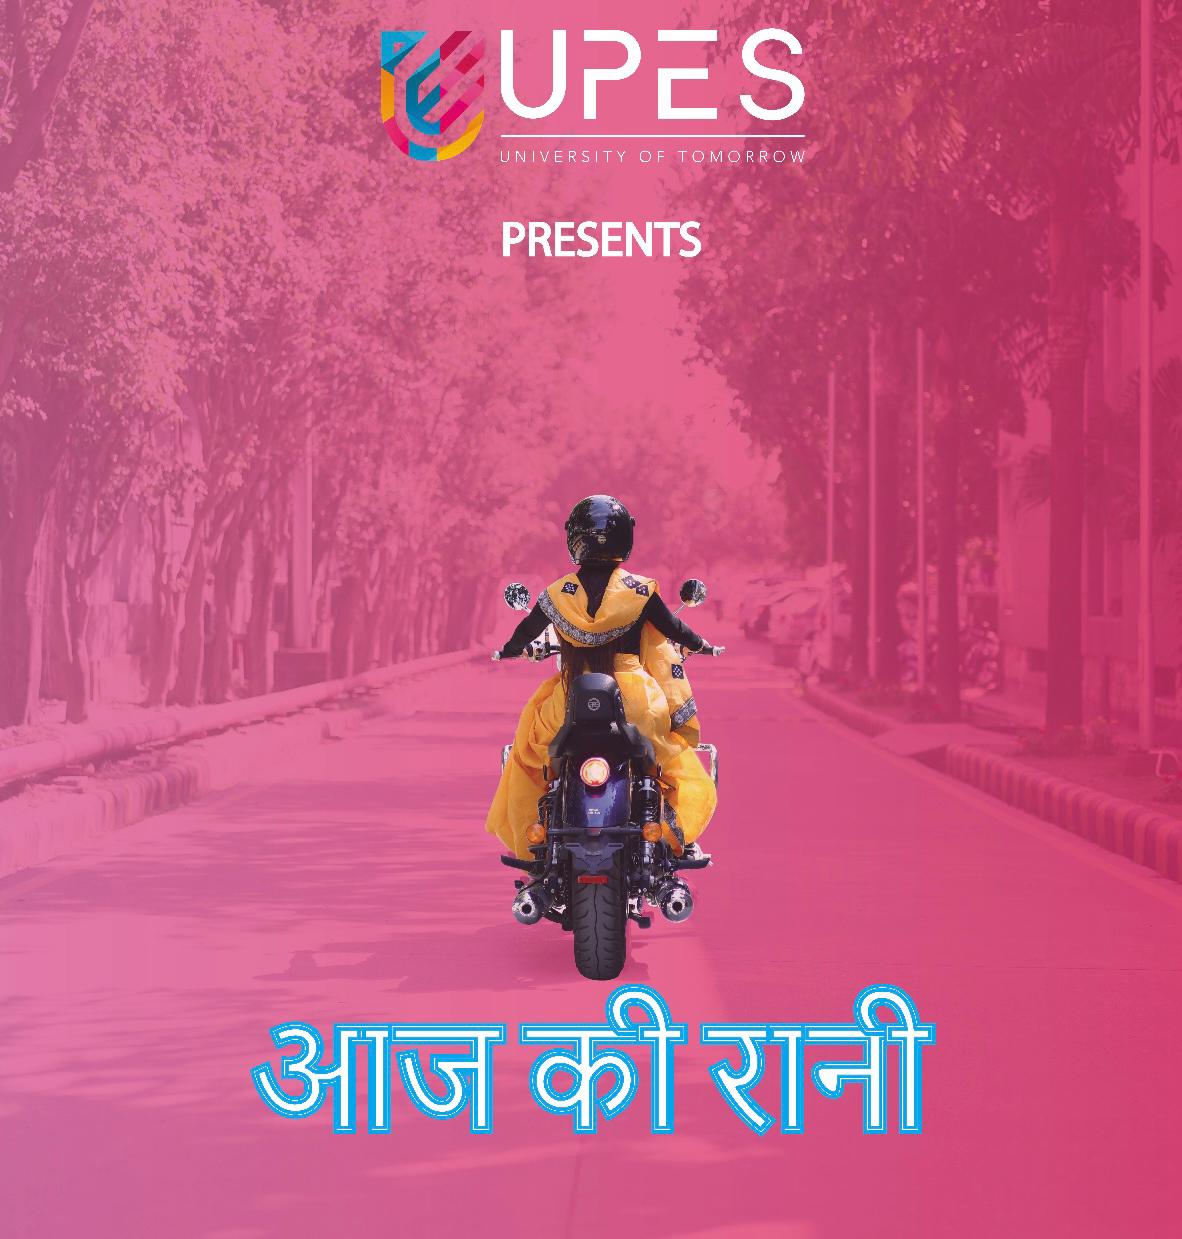 UPES releases music video Aaj Ki Rani with Daler Mehndi as lead singer